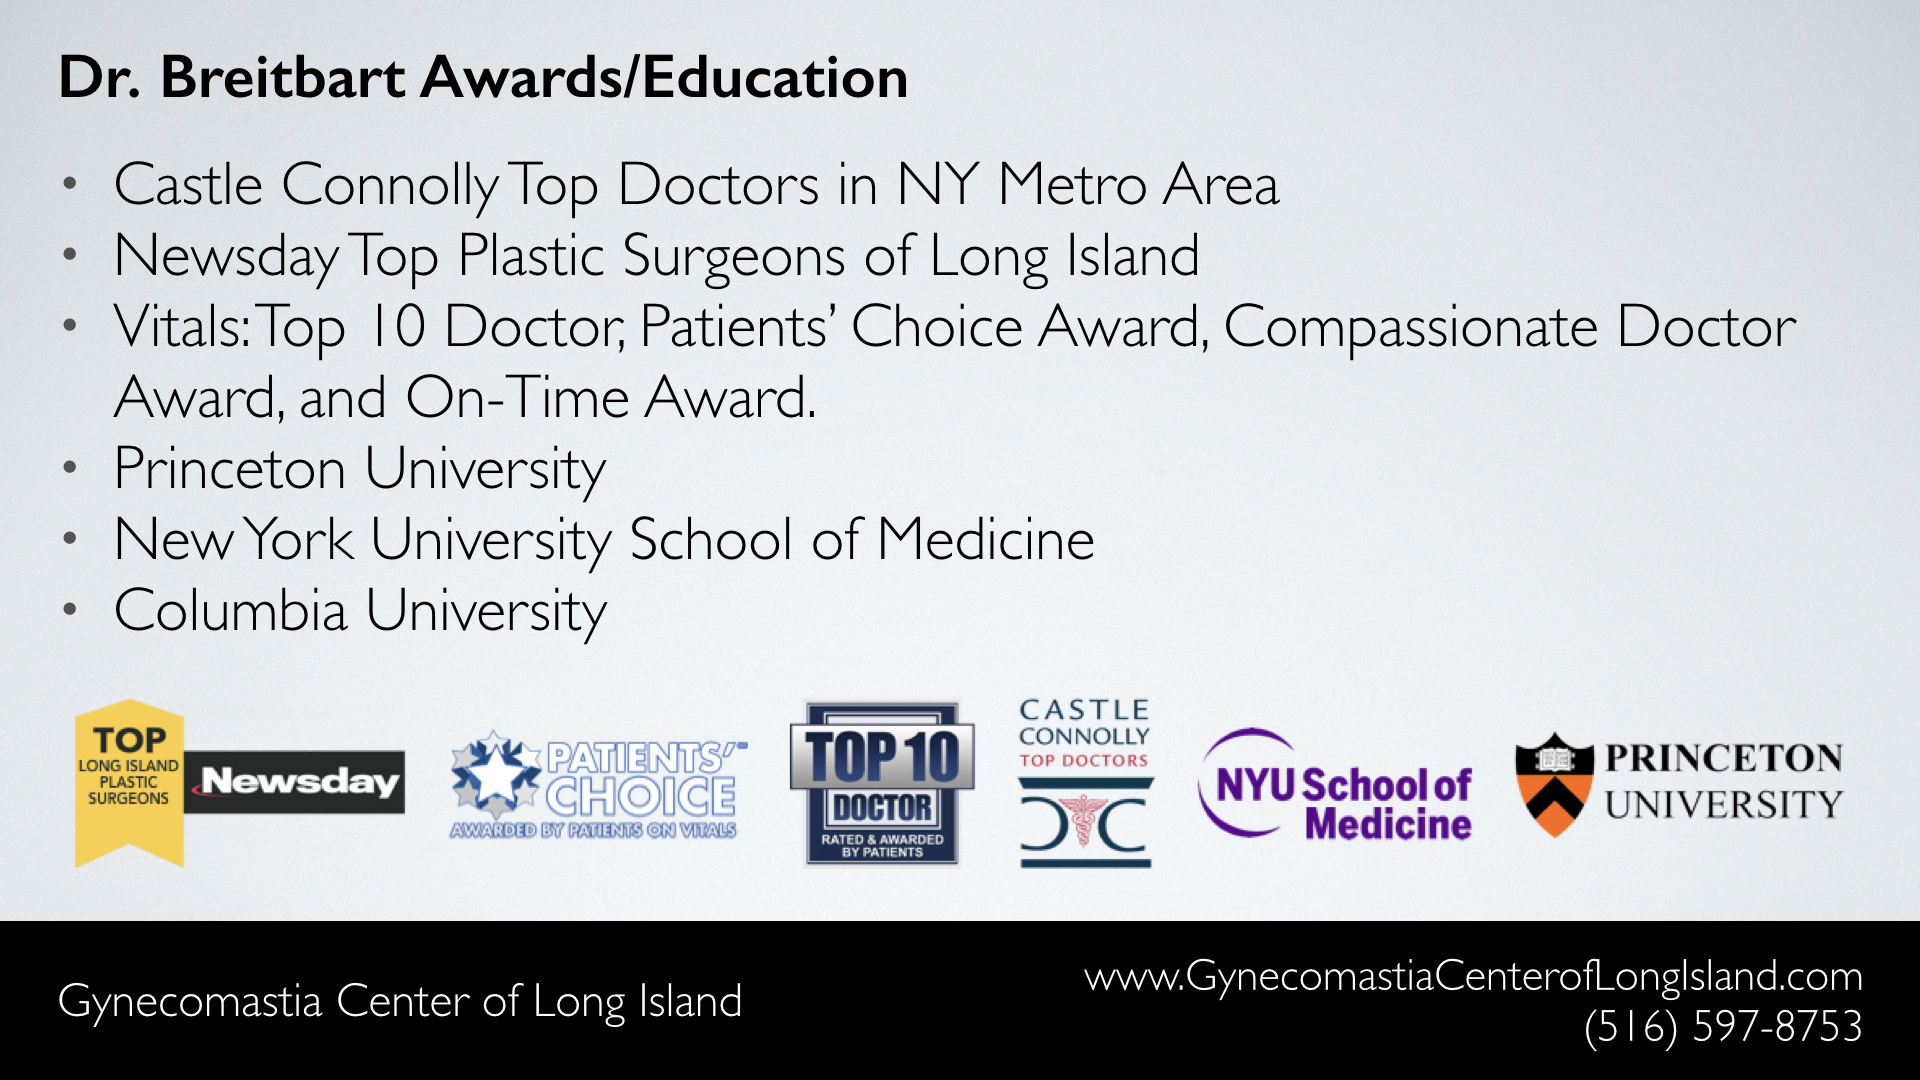 Gynecomastia Center of Long Island (Manhasset NY) - Awards and Education